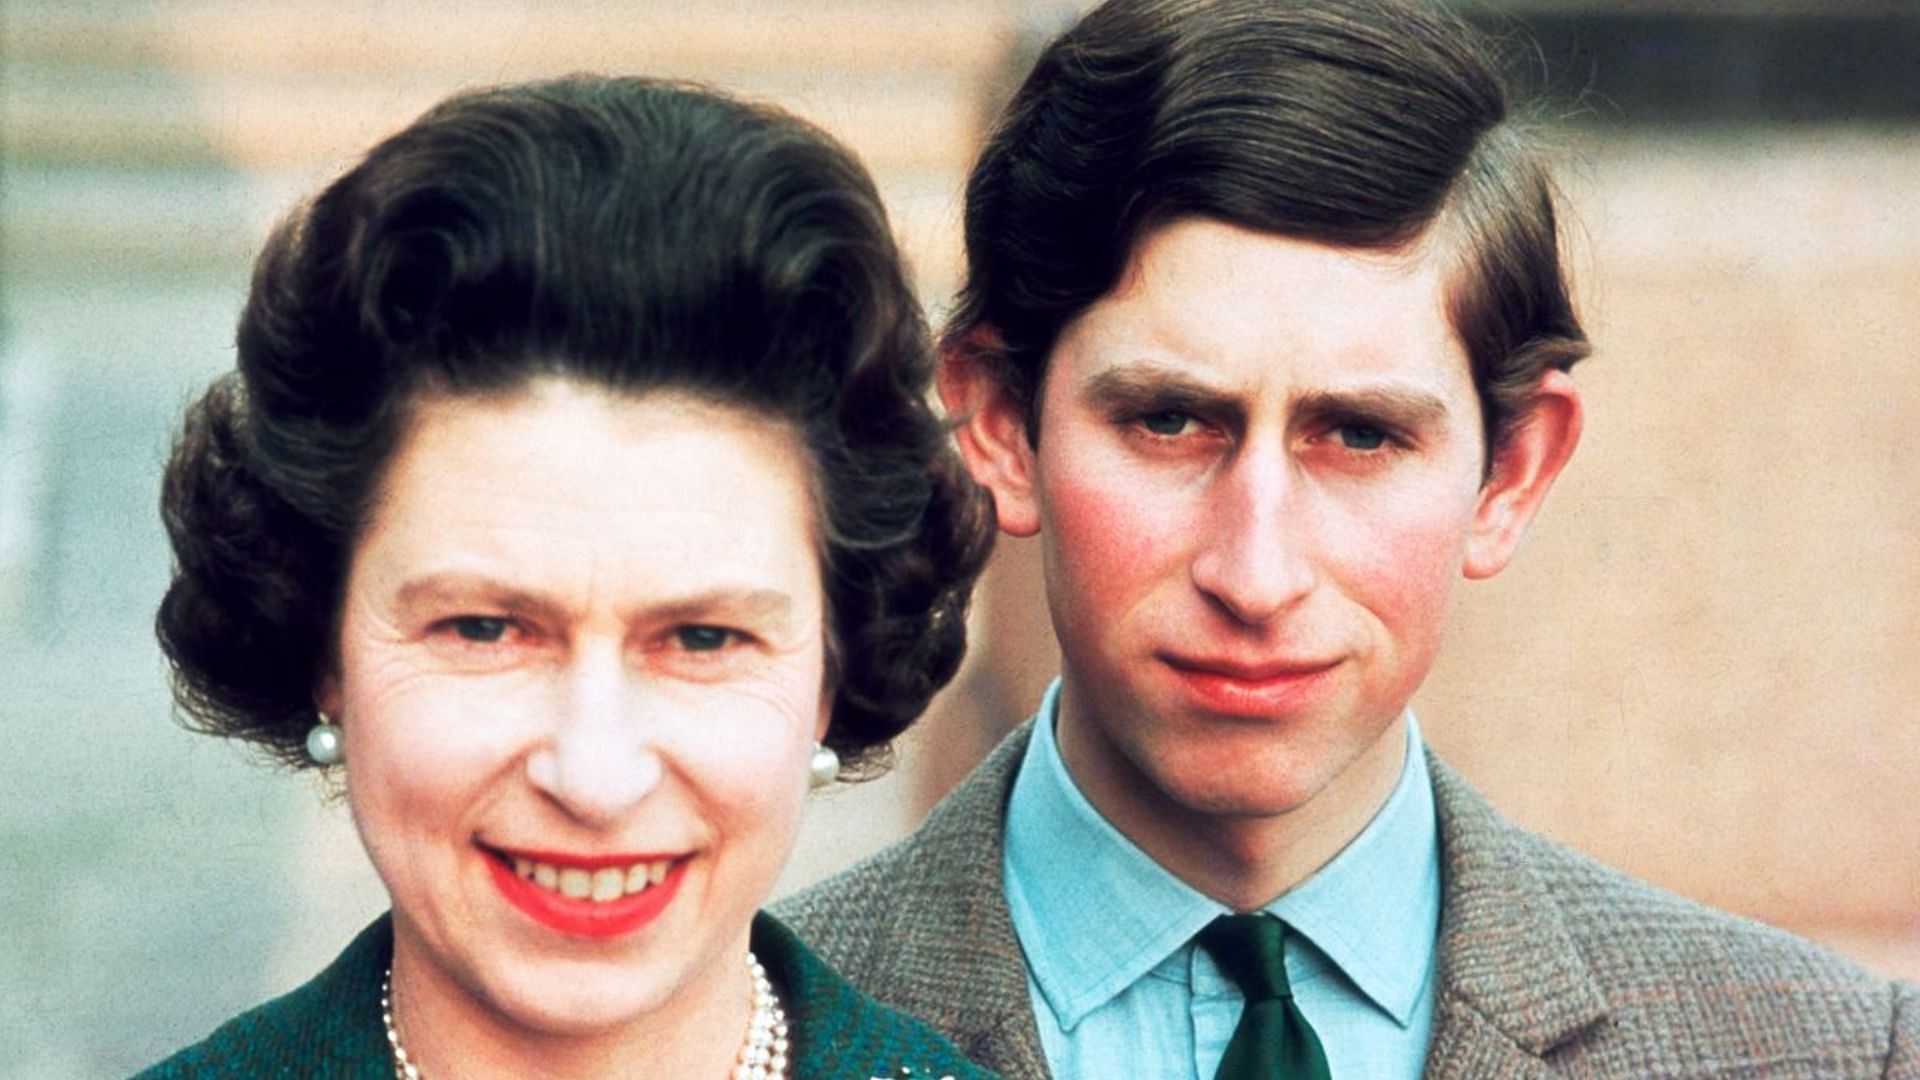 Queen Elizabeth II with Prince Charles. (Image via Hulton Deutsch//Getty Images)